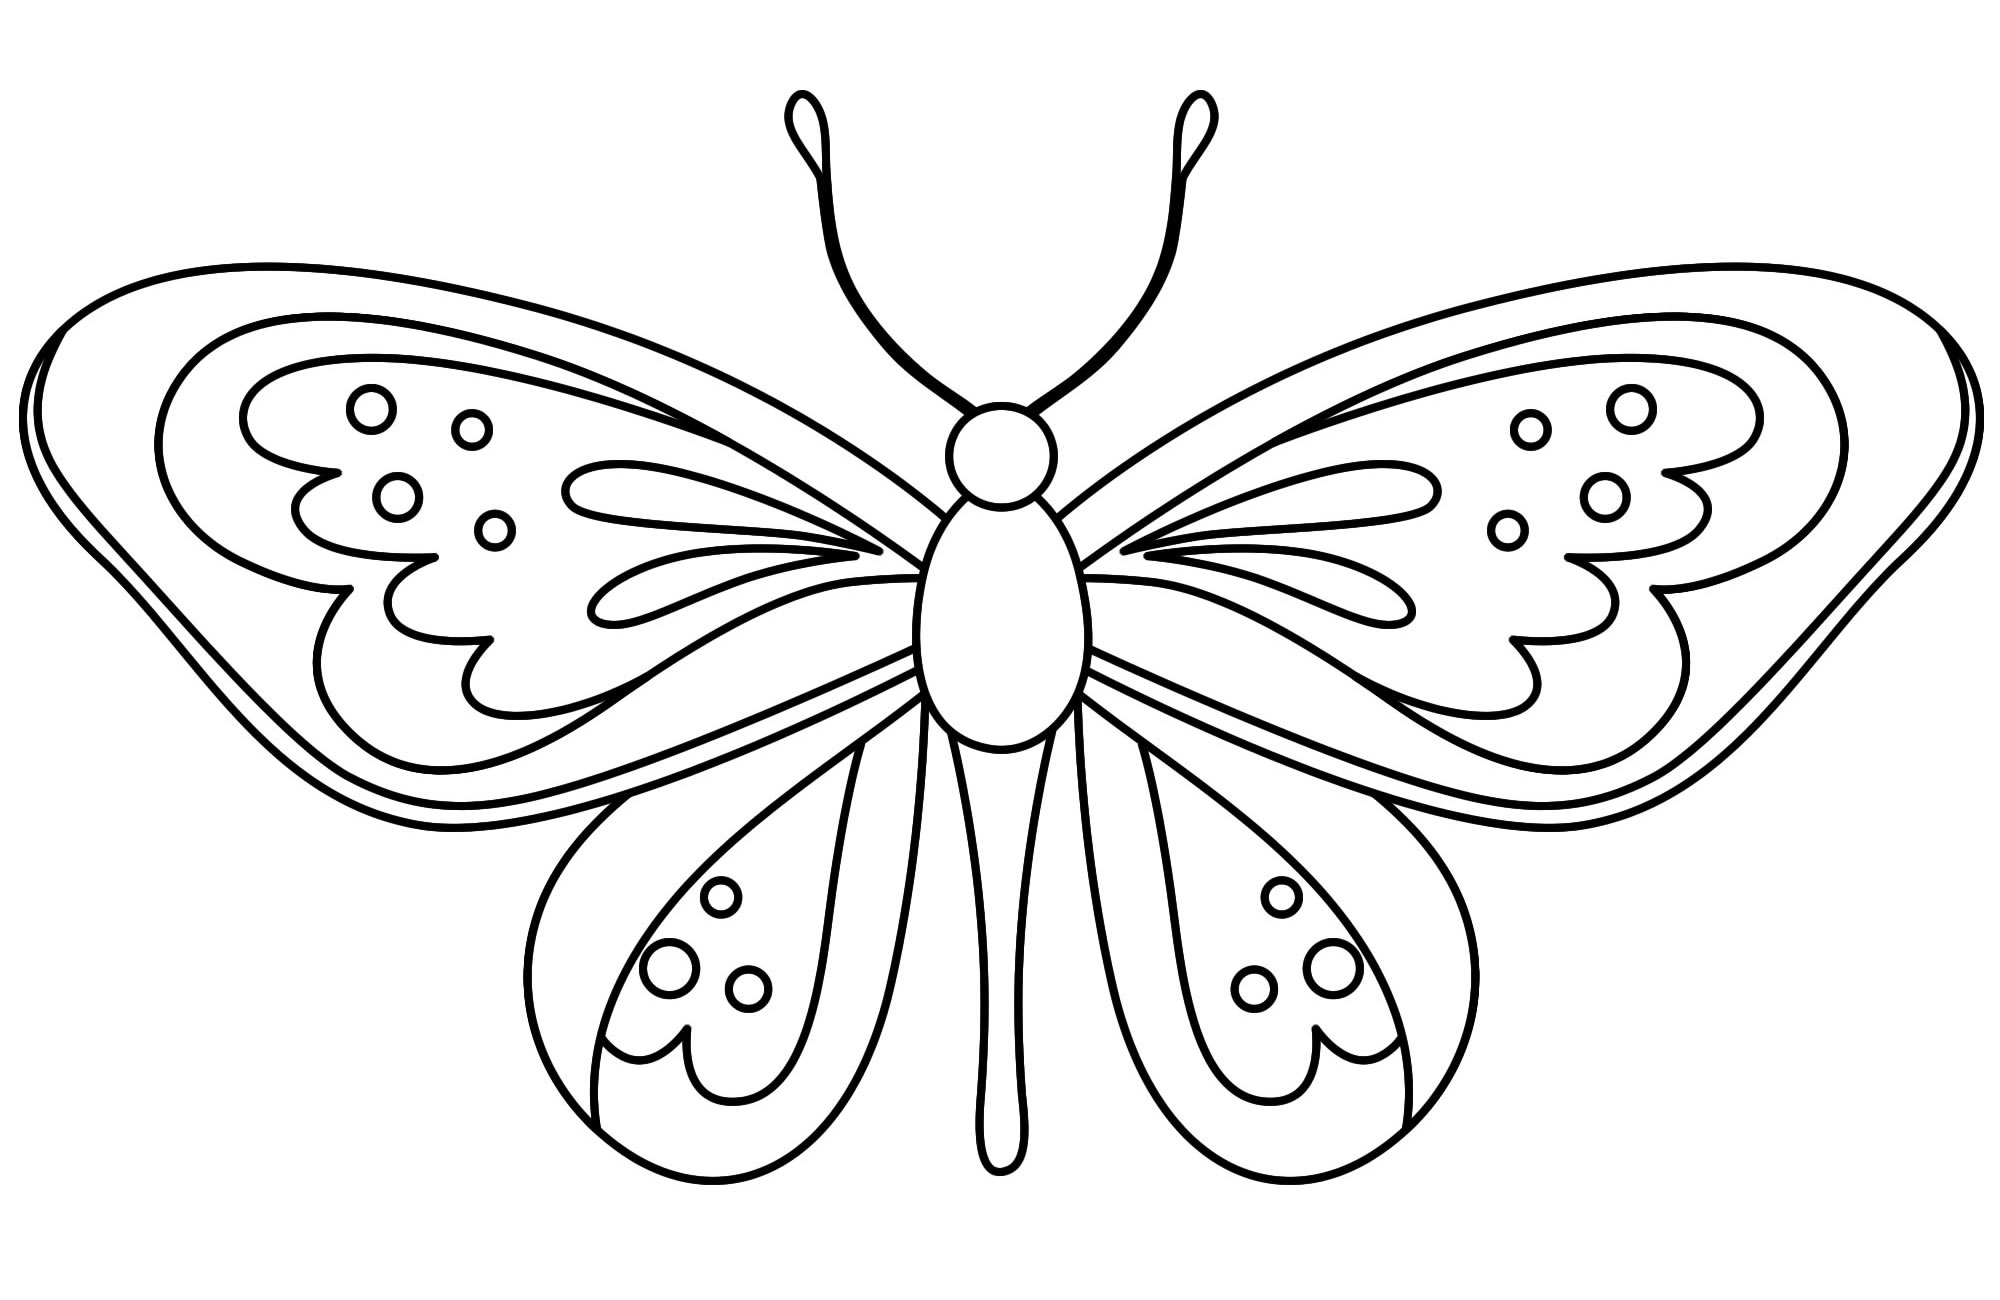 Раскраска Бабочка из белого шоколада 150г